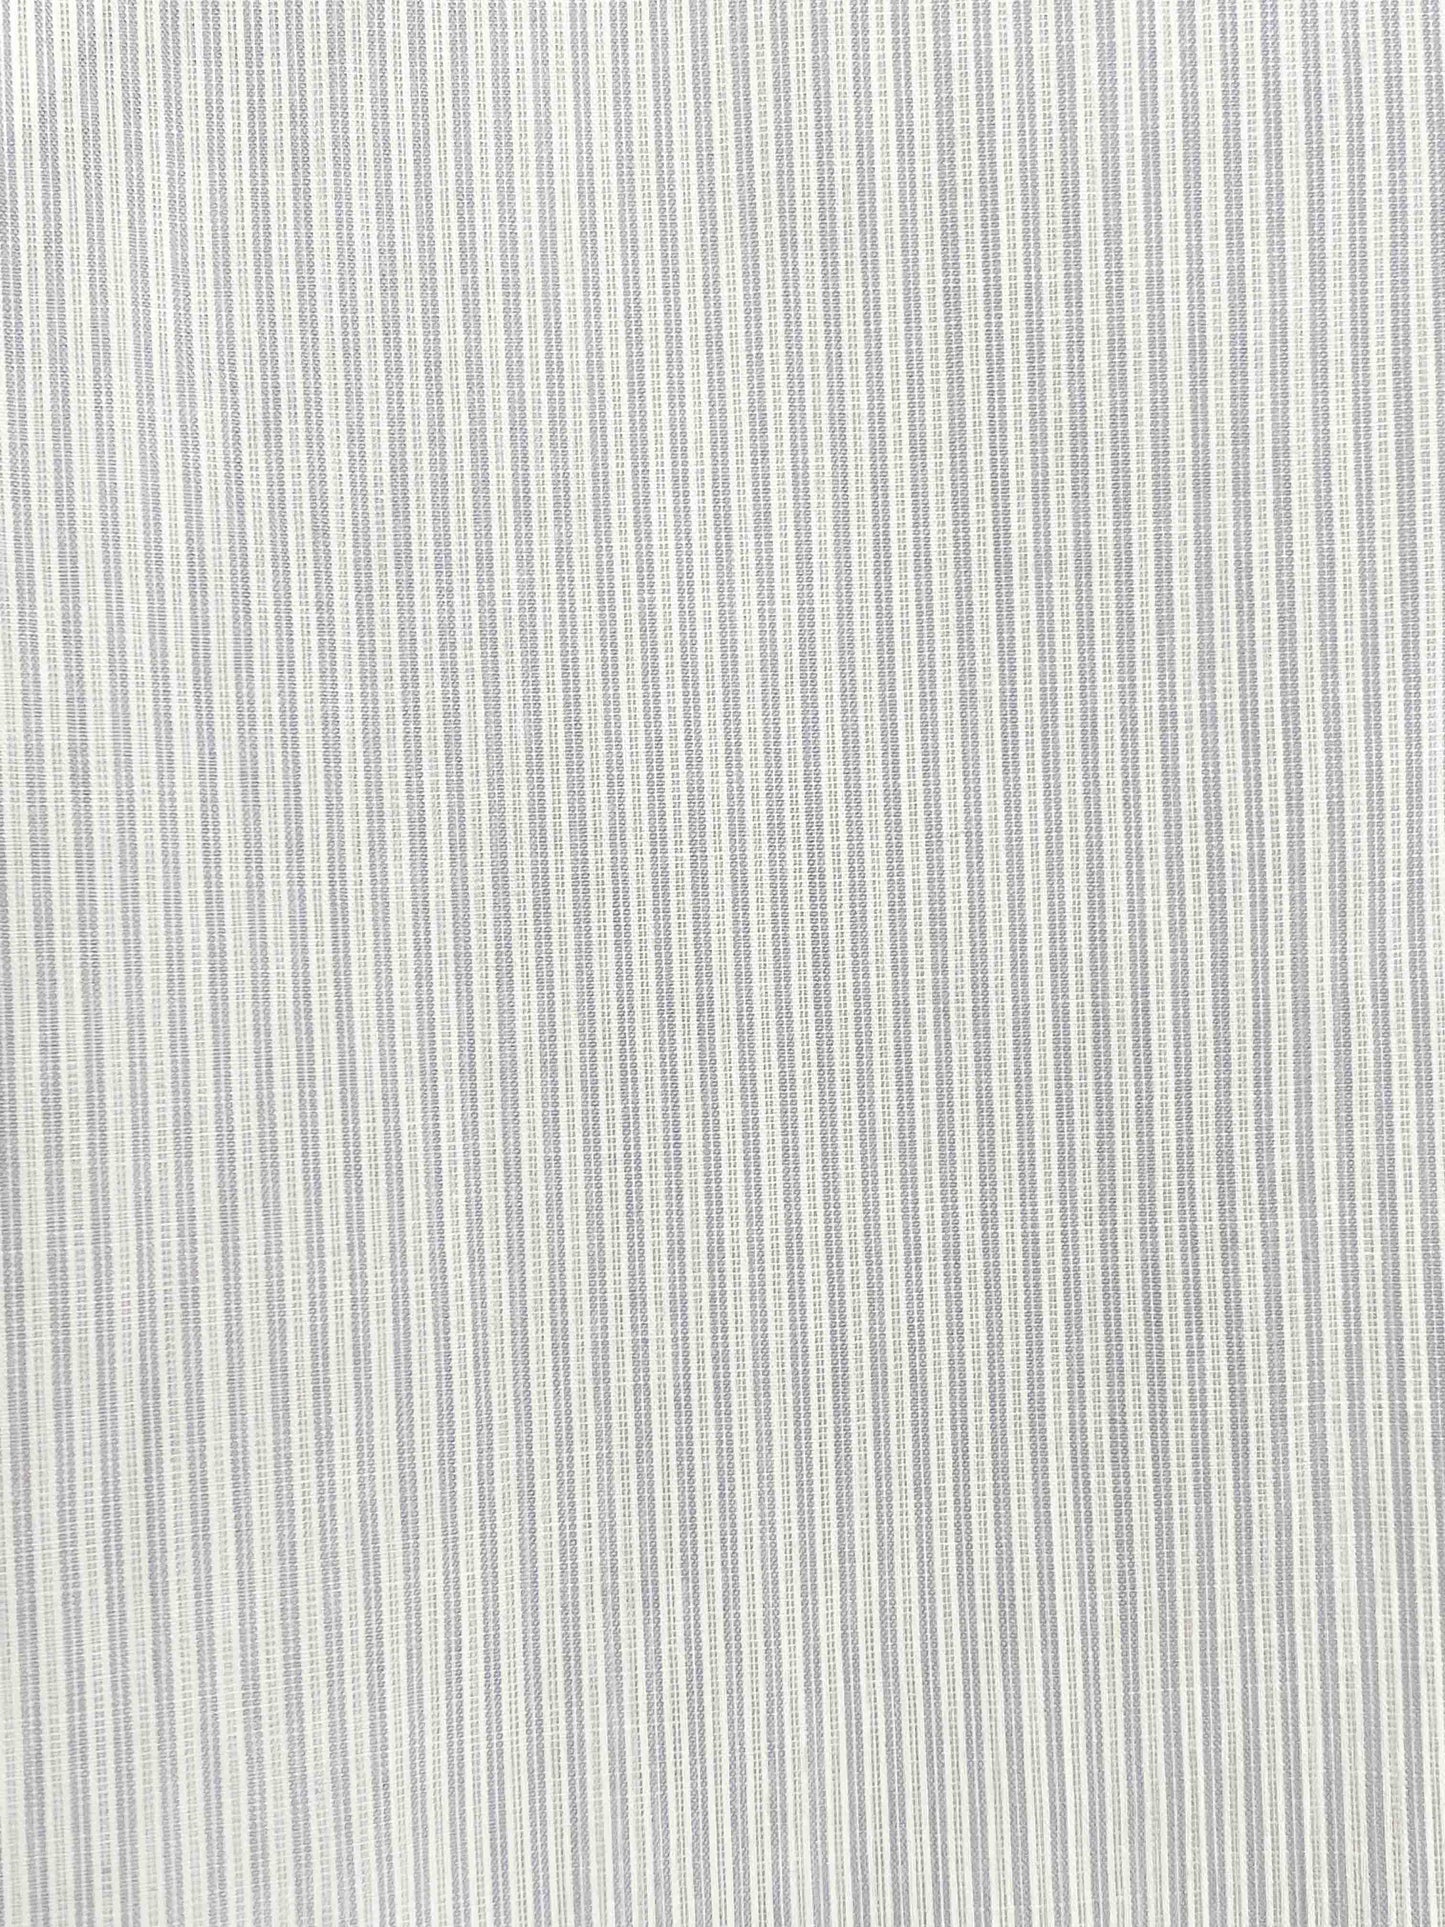 Close up of Oversized Collared Shirt - Dream Stripe fabric by Deiji Studios